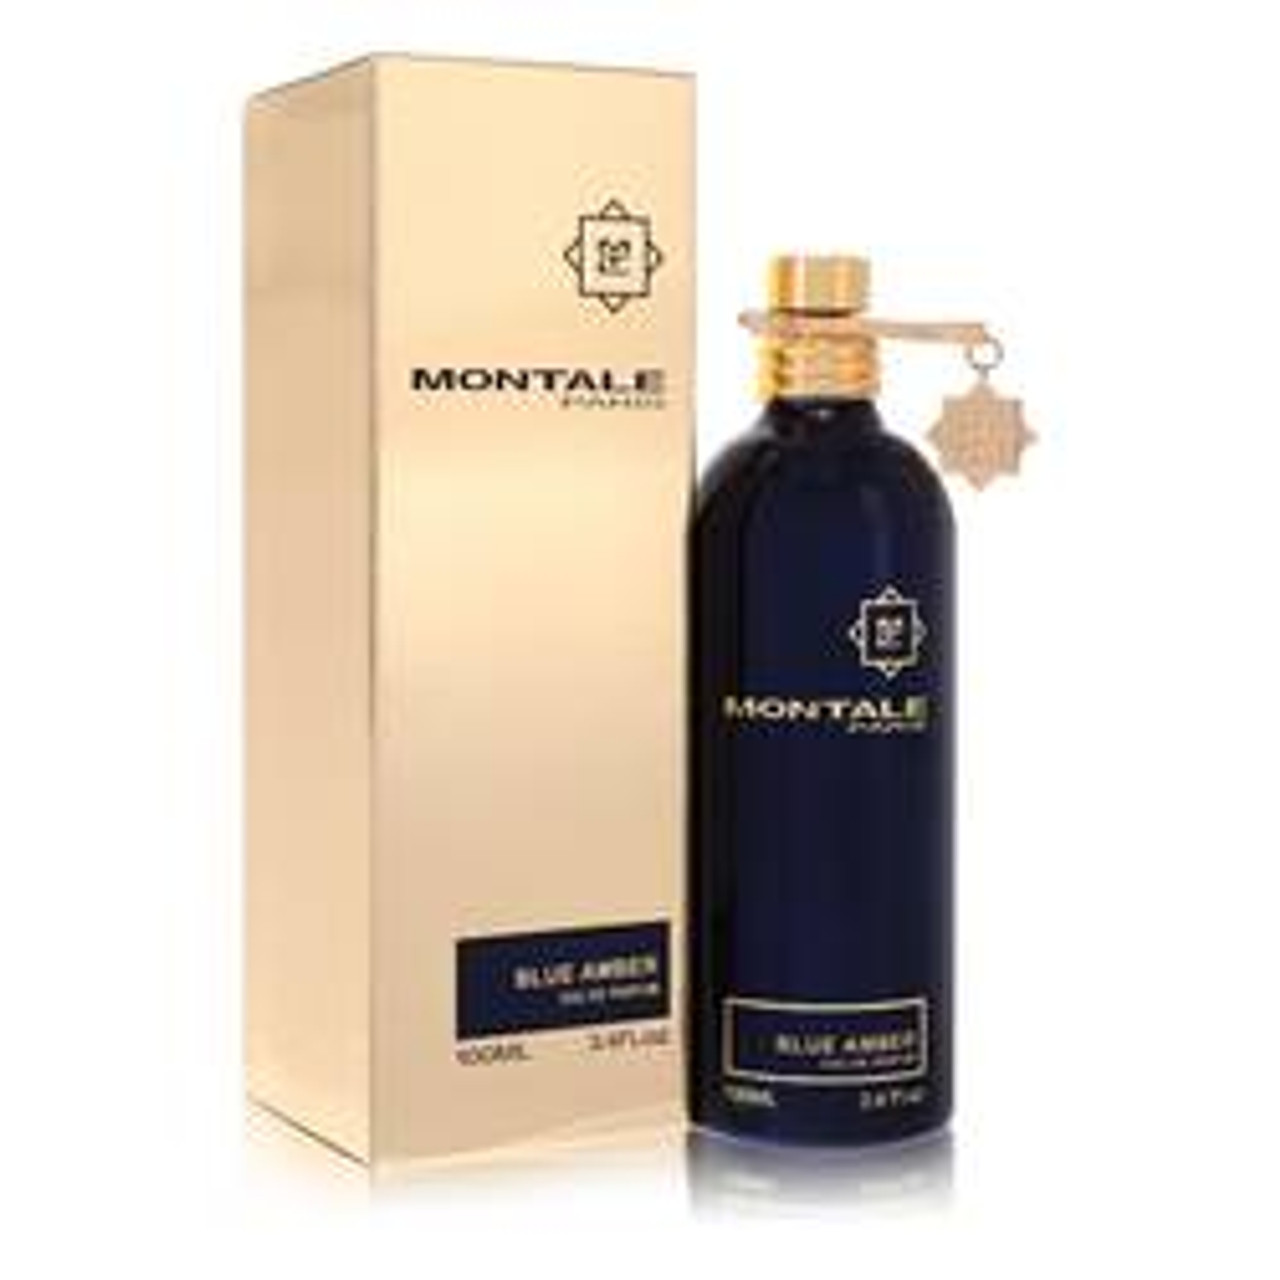 Montale Blue Amber Perfume By Montale Eau De Parfum Spray (Unisex) 3.4 oz for Women - *Pre-Order